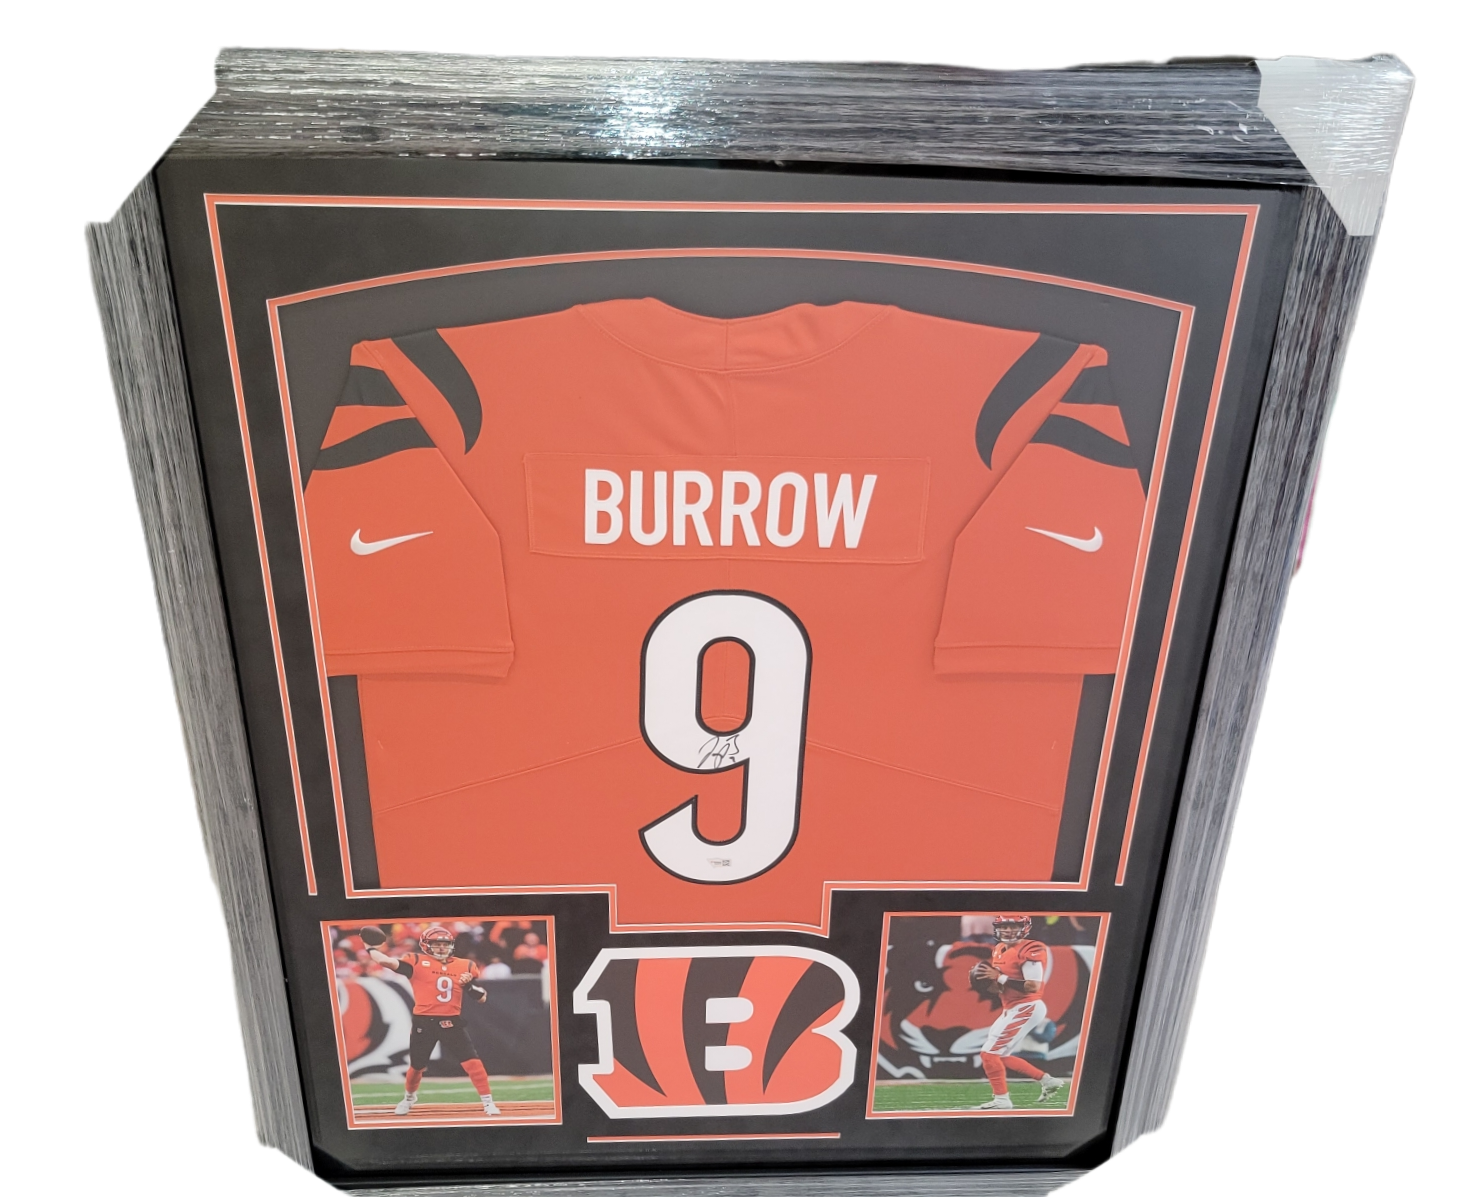 framed joe burrow jersey